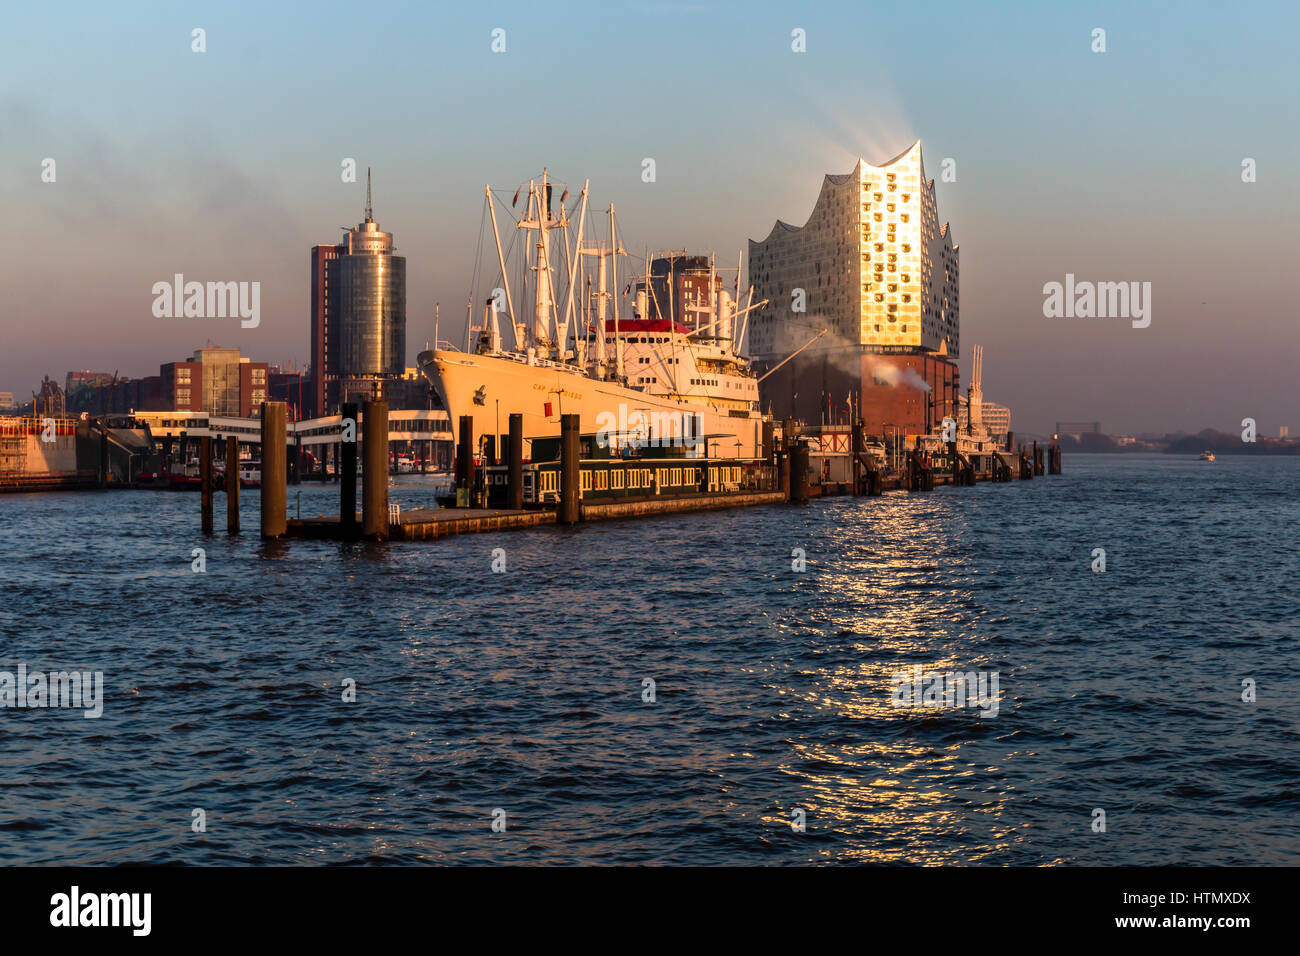 Elbphilharmonie and Museum ship Cap San Diego, Hamburg, Germany Stock Photo